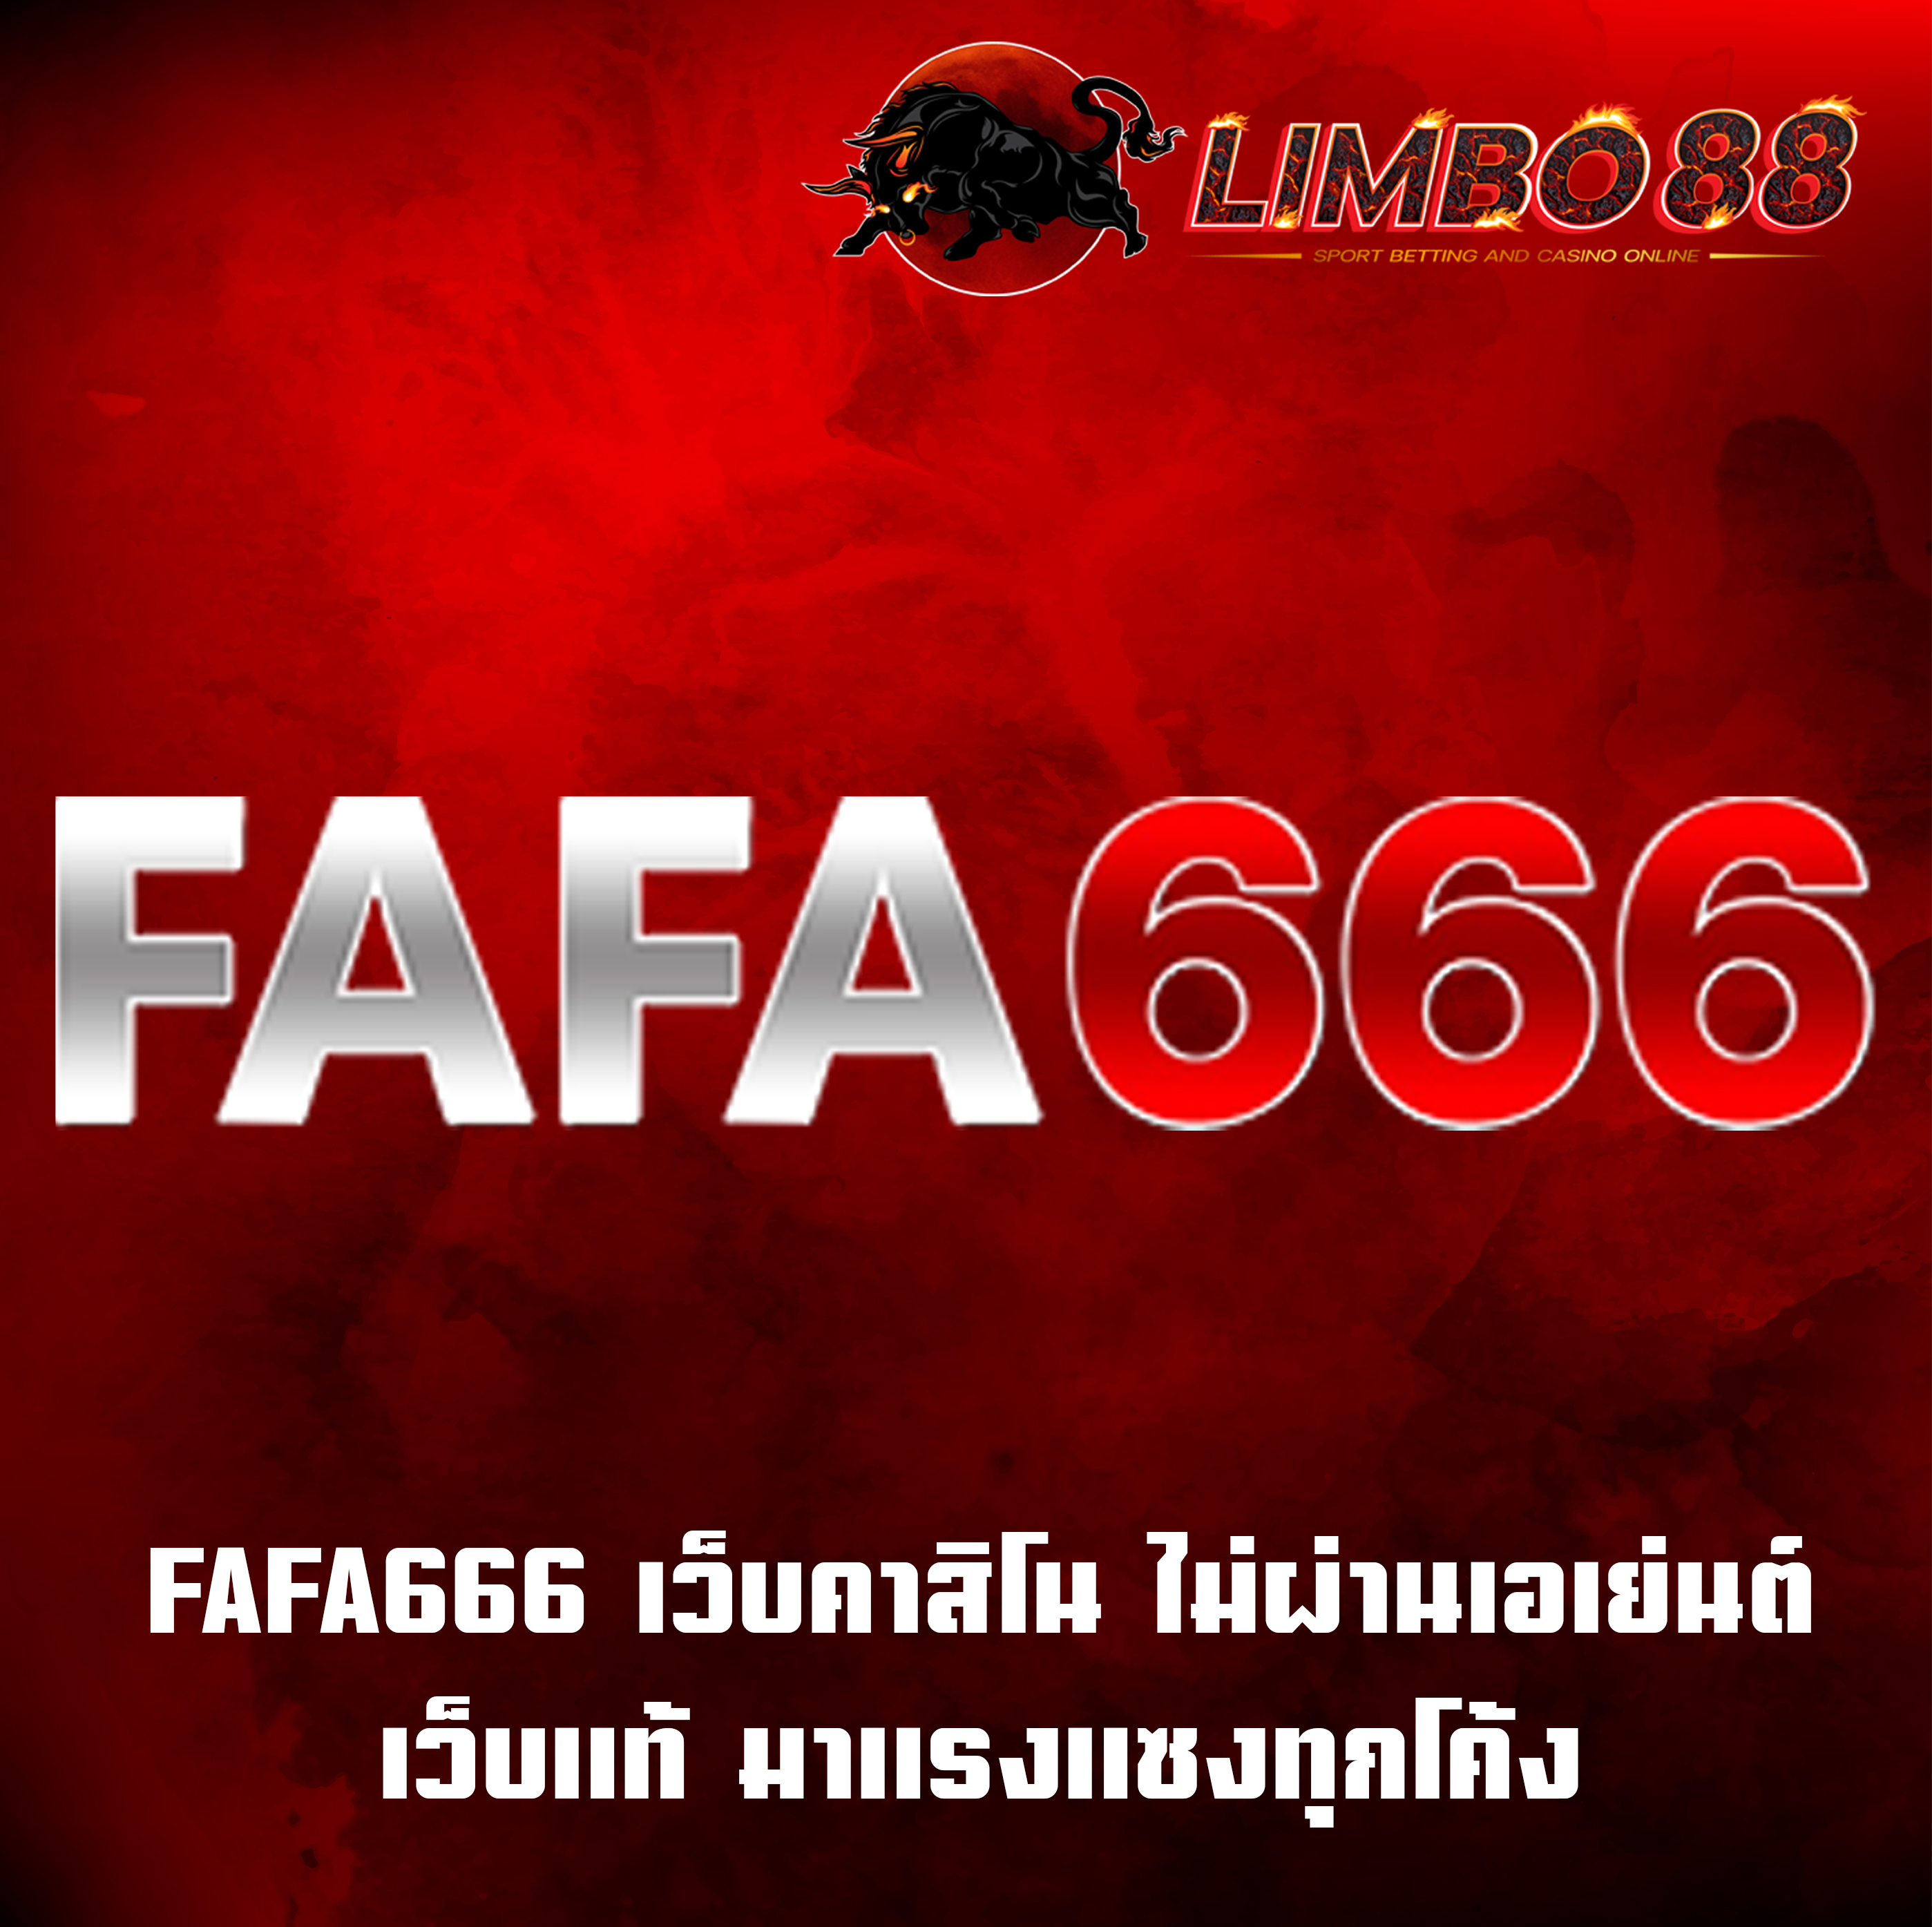 FAFA666 เว็บคาสิโน ไม่ผ่านเอเย่นต์ เว็บแท้ มาแรงแซงทุกโค้ง